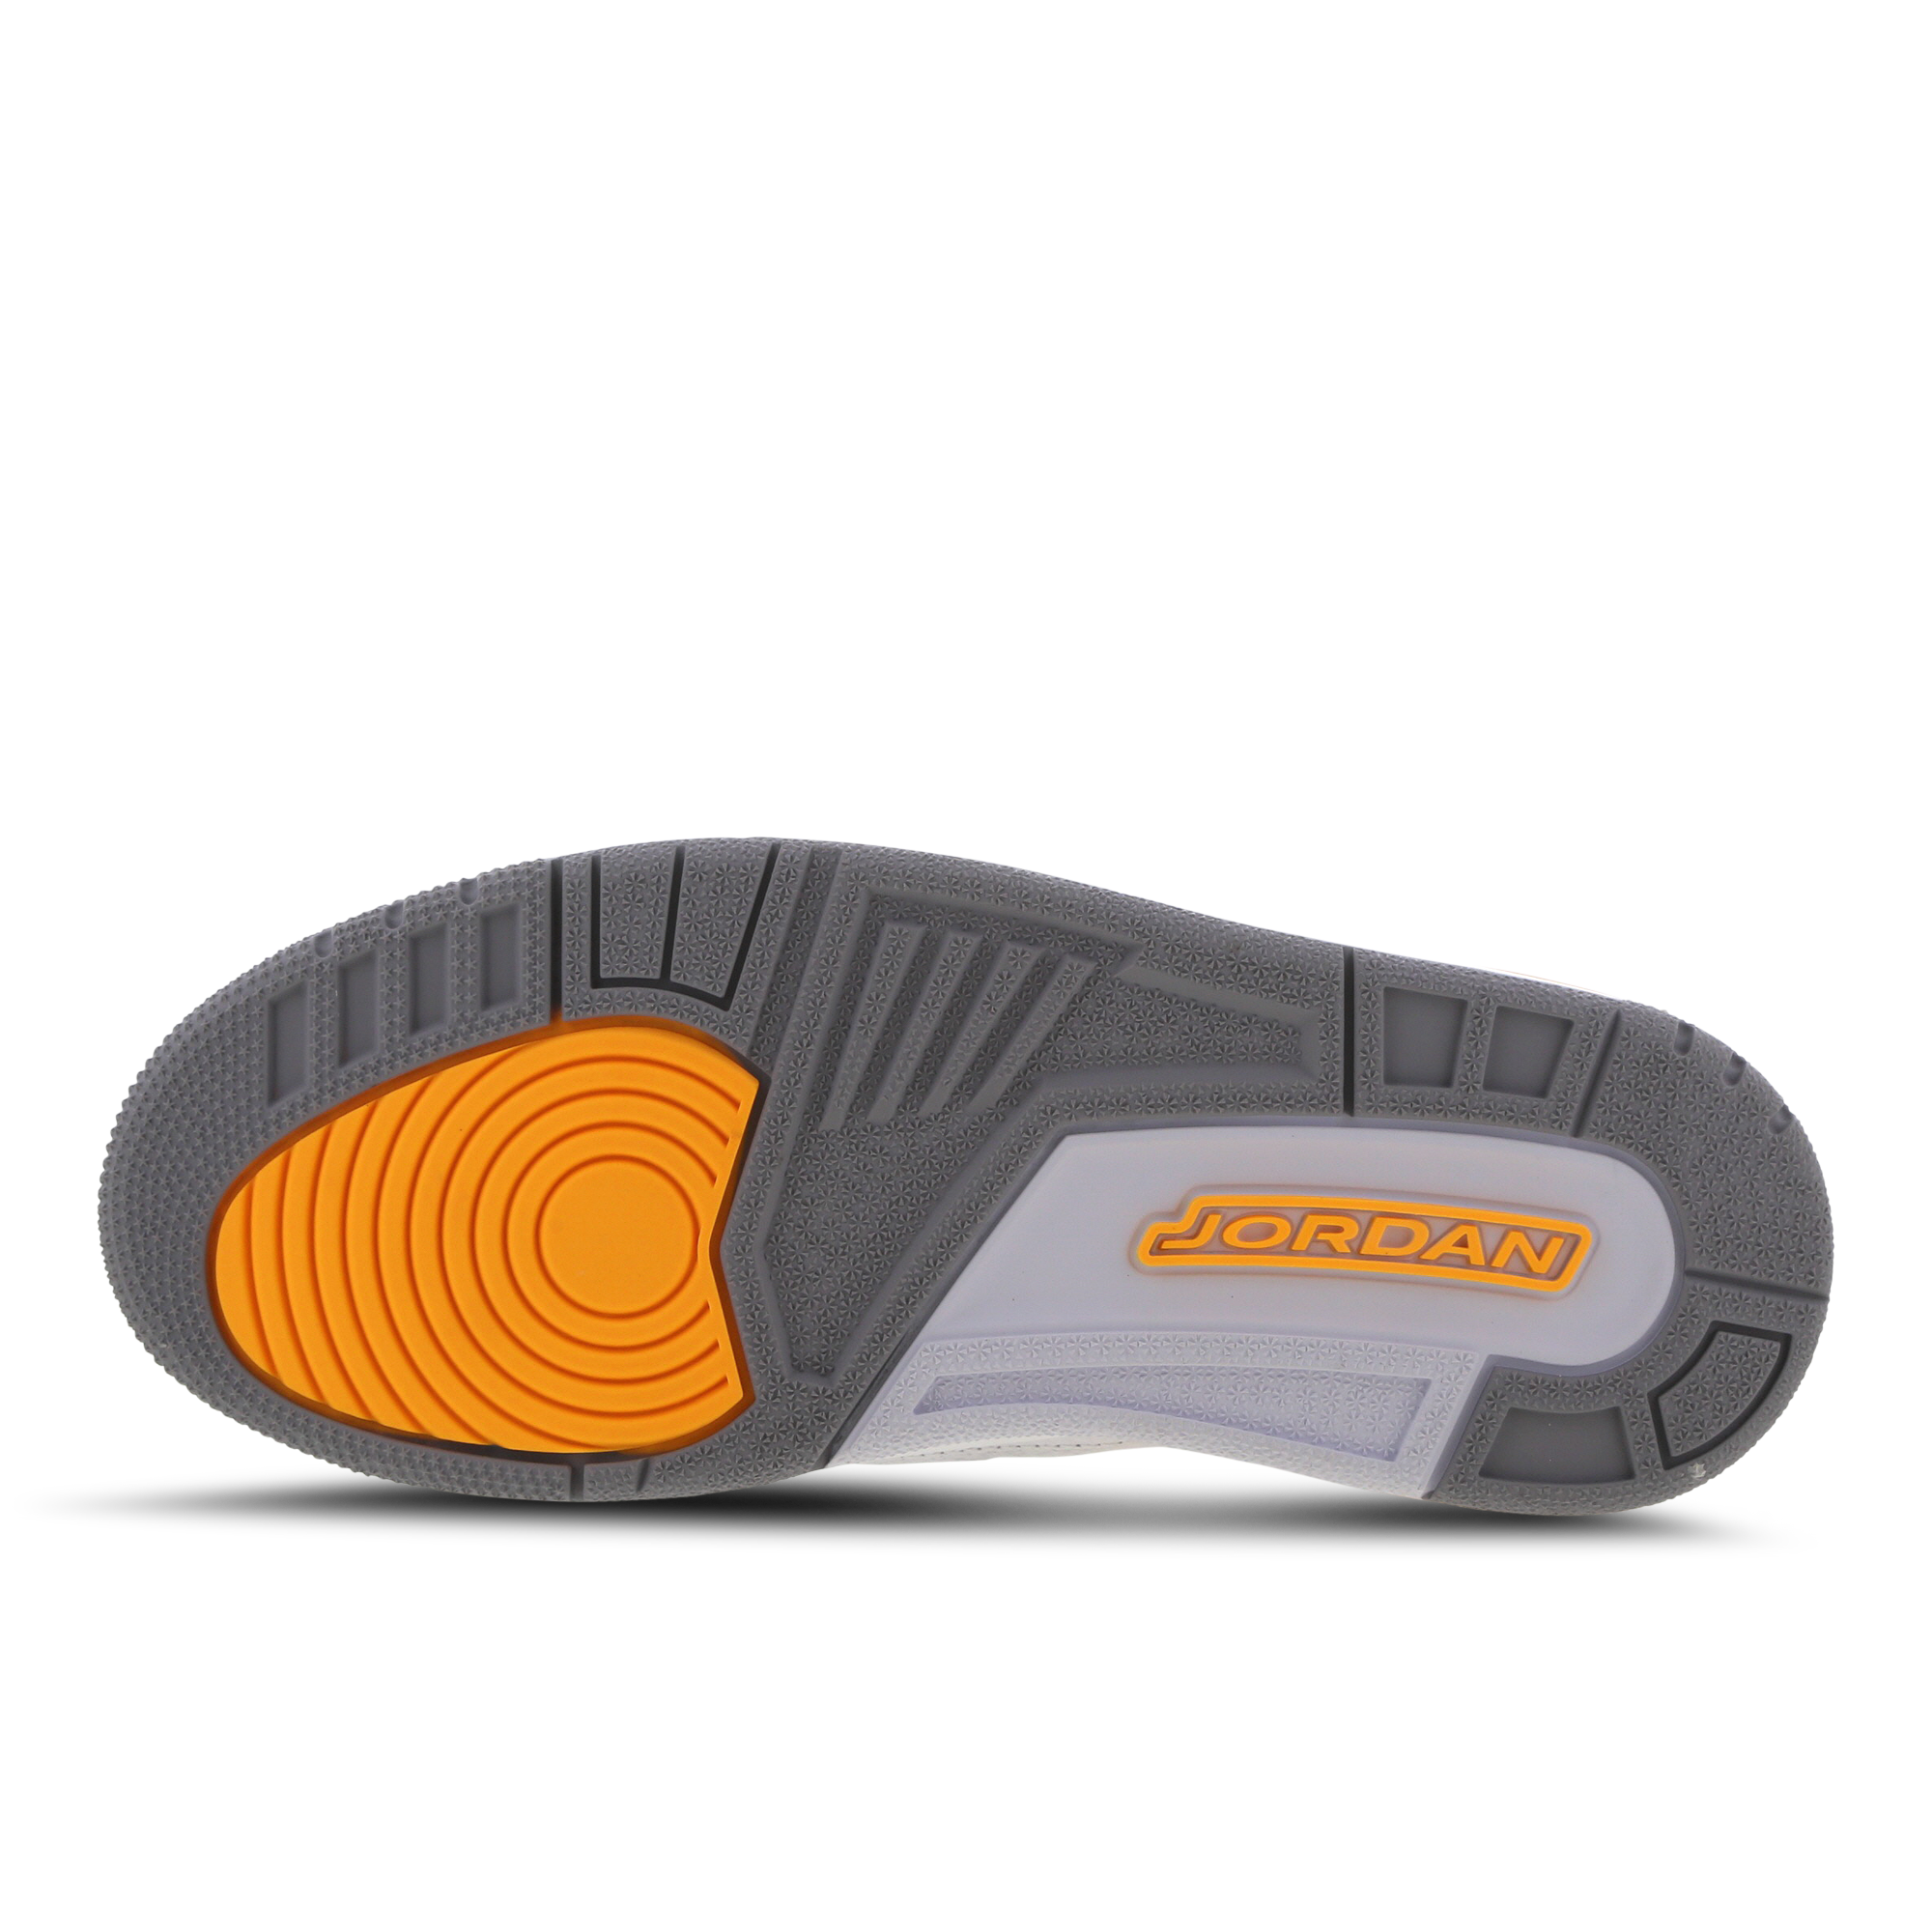 jordan 3 laser orange foot locker